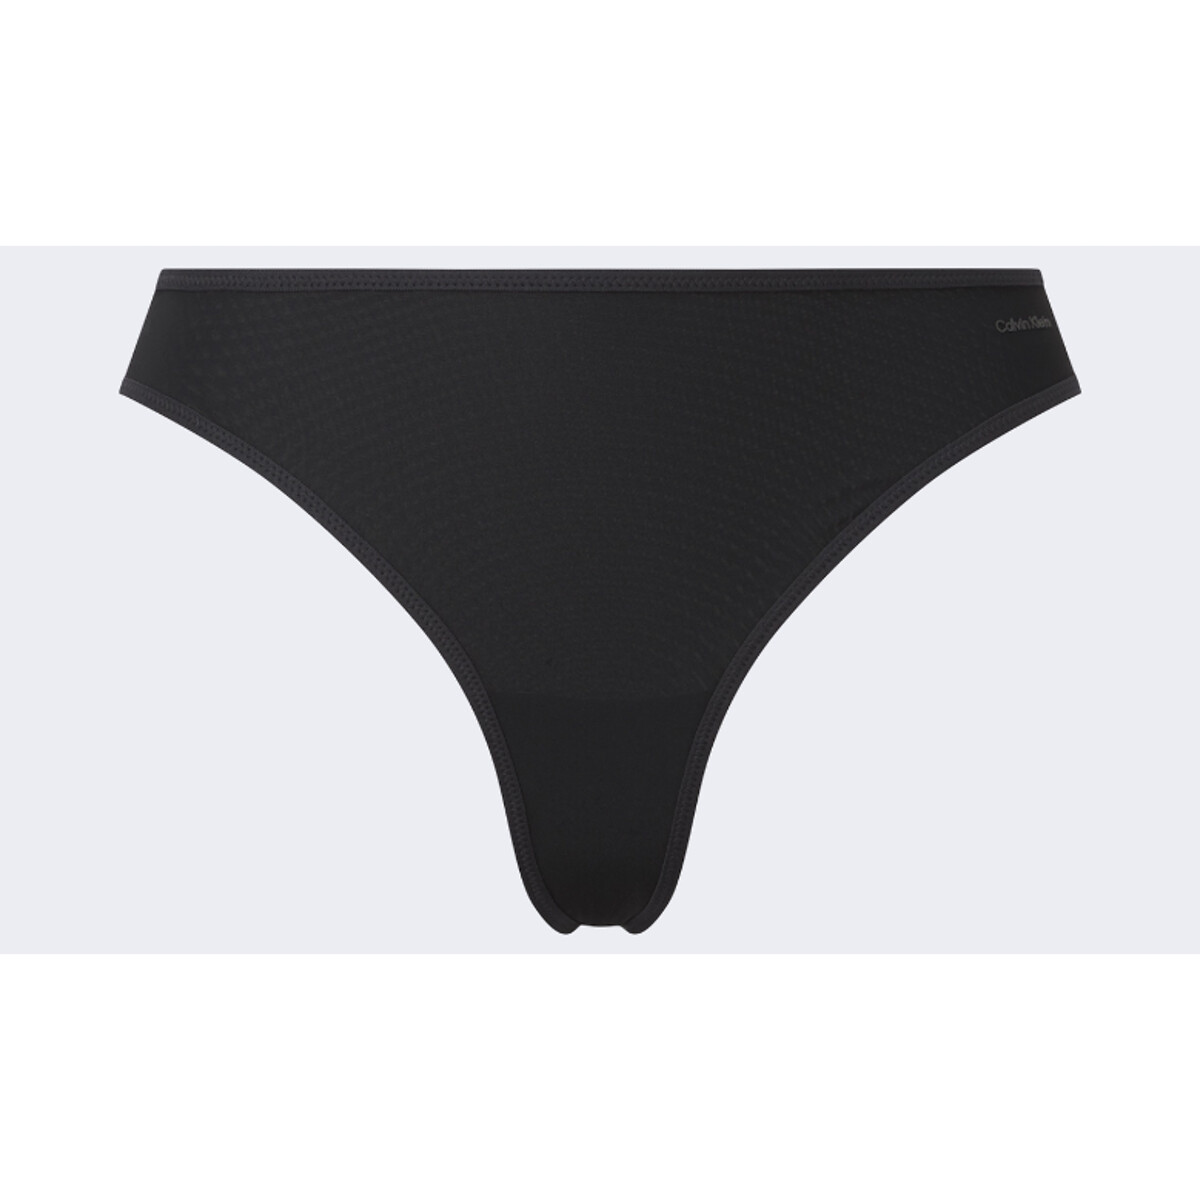 Sutiã Calvin Klein Underwear Triângulo Tule Preto - Compre Agora